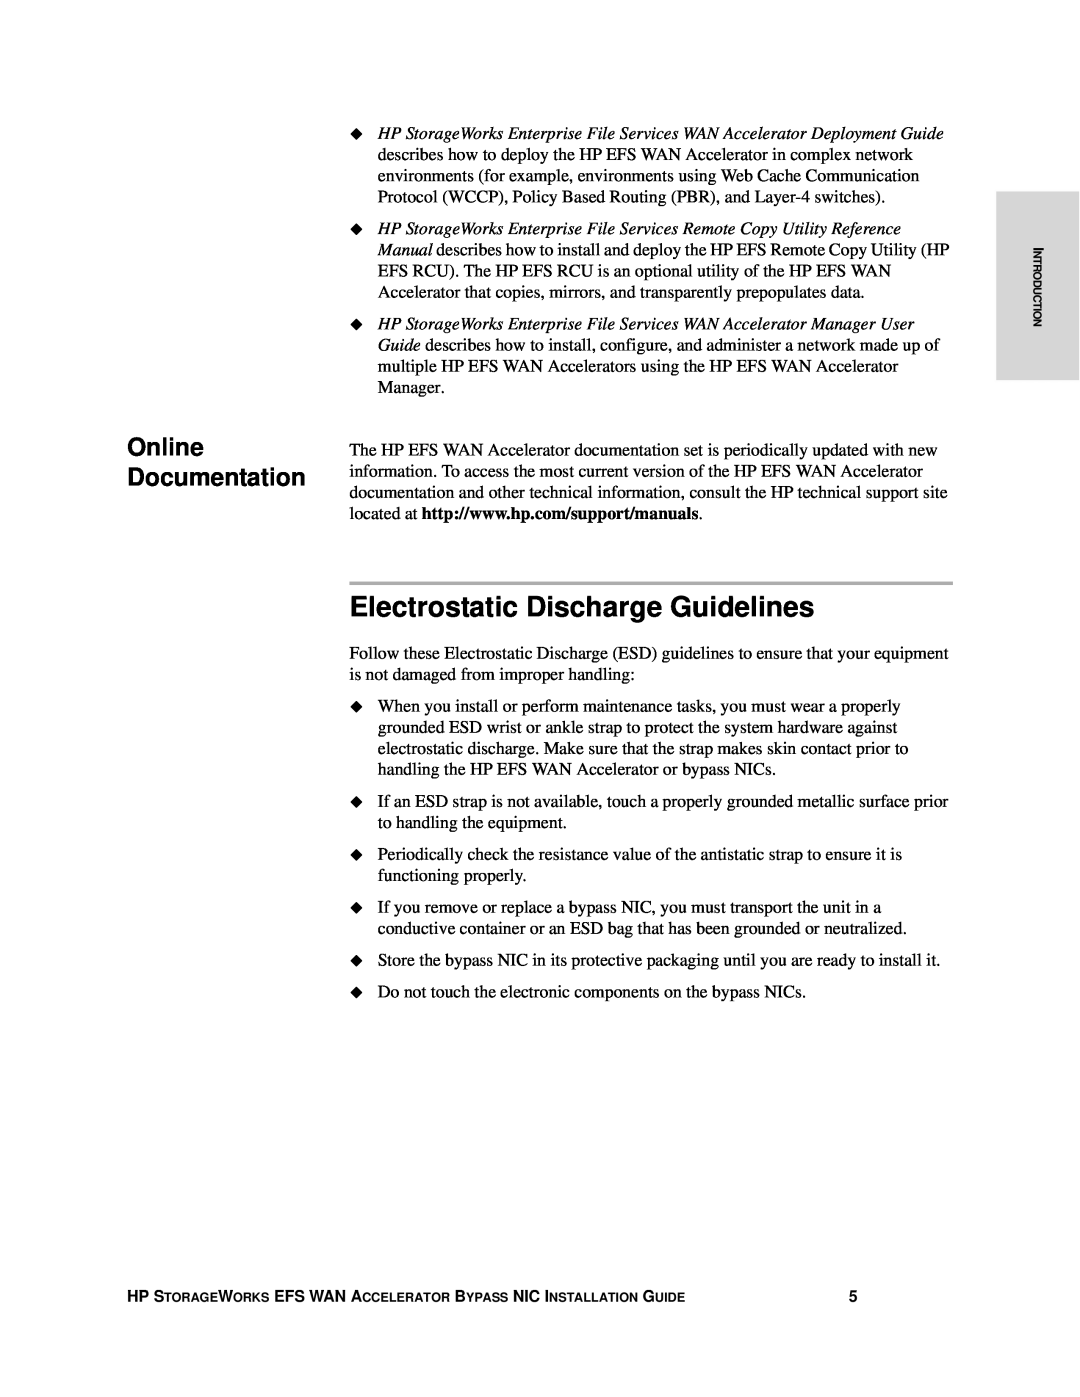 HP Enterprise File Services WAN Accelerator manual Electrostatic Discharge Guidelines, Online Documentation 